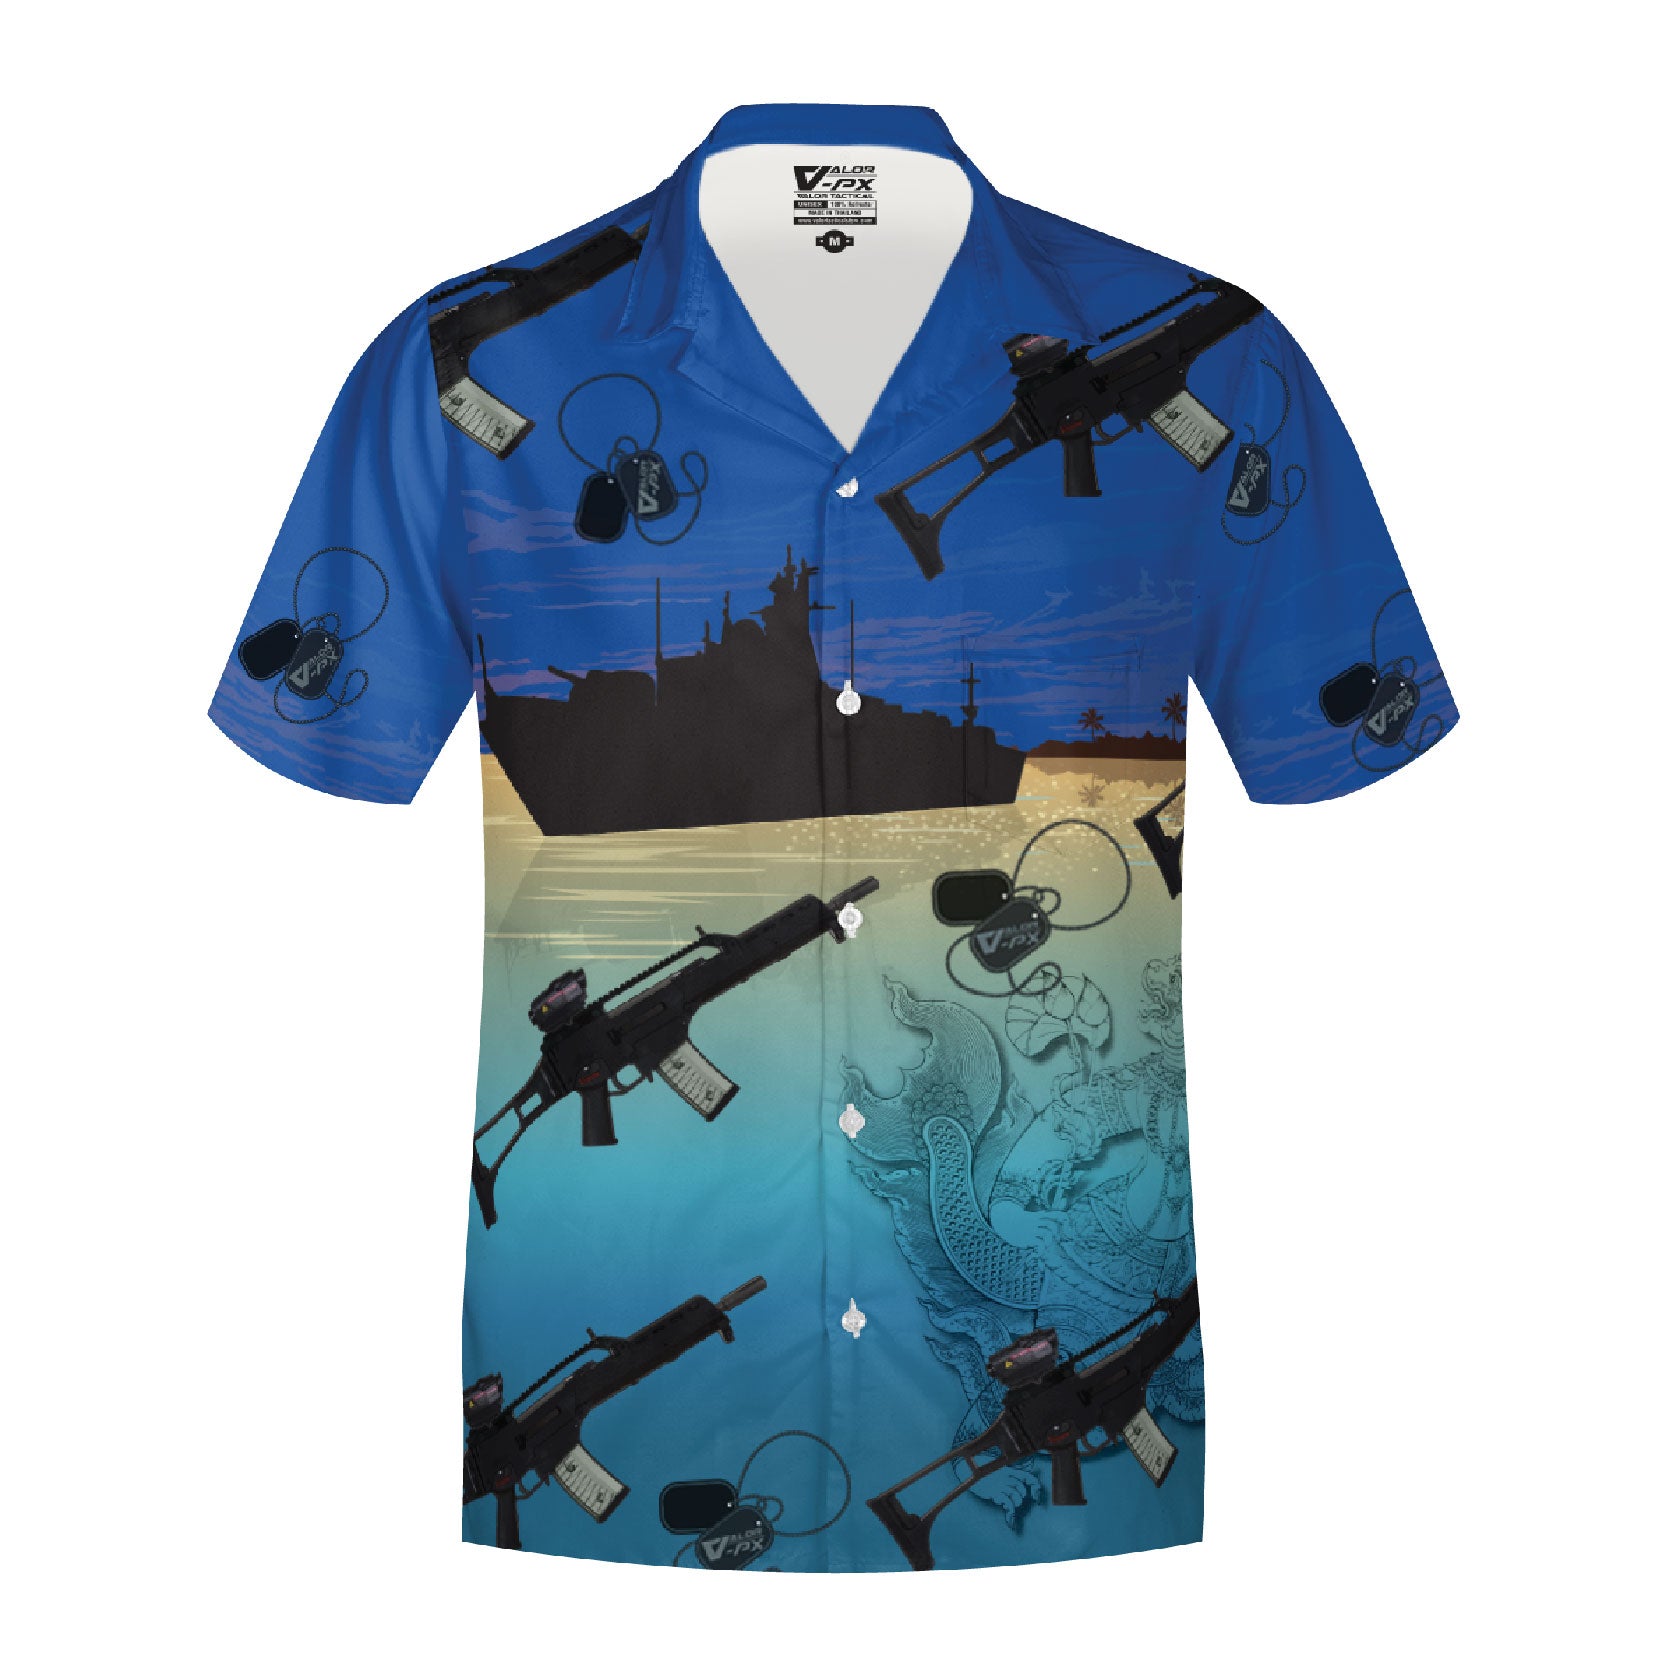 Valor PX Hawaii Shirt - มัจฉานุจู่โจม [Dark Blue]